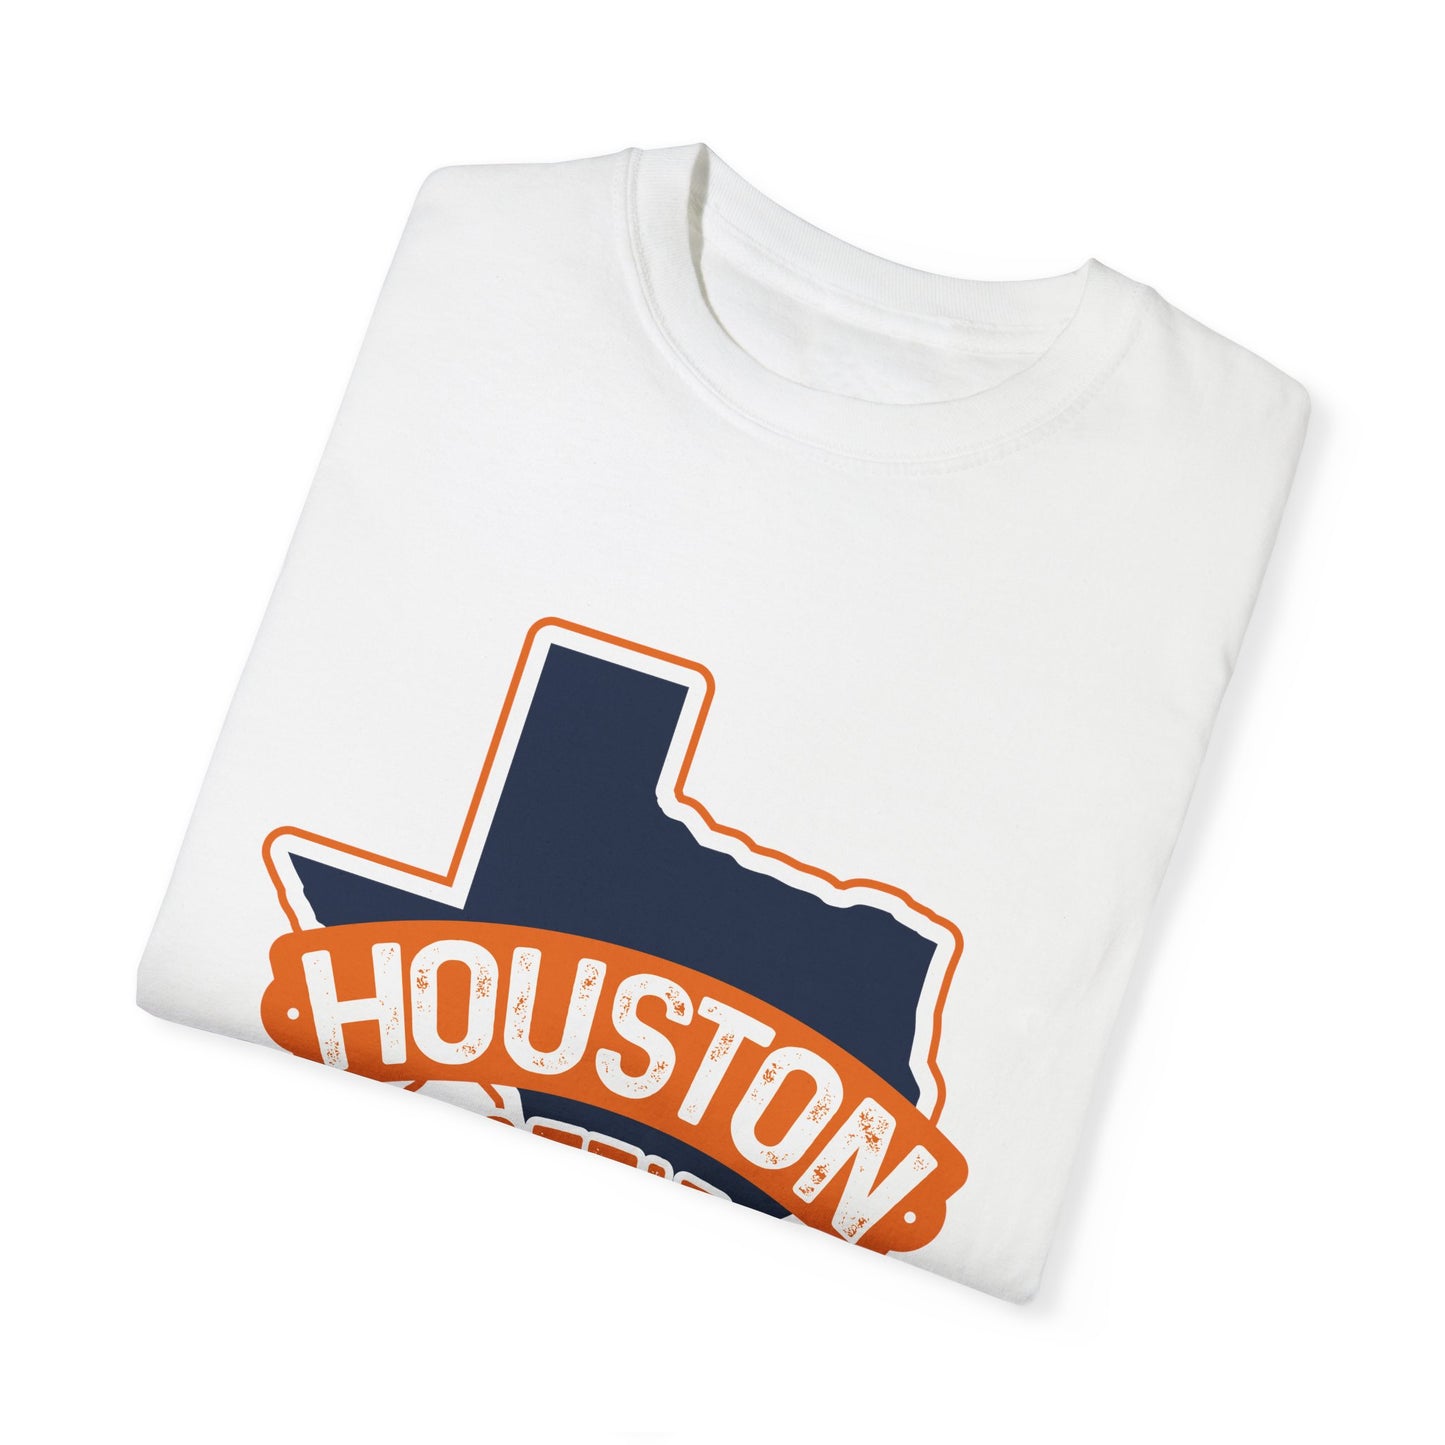 Houston Hotties T-shirt